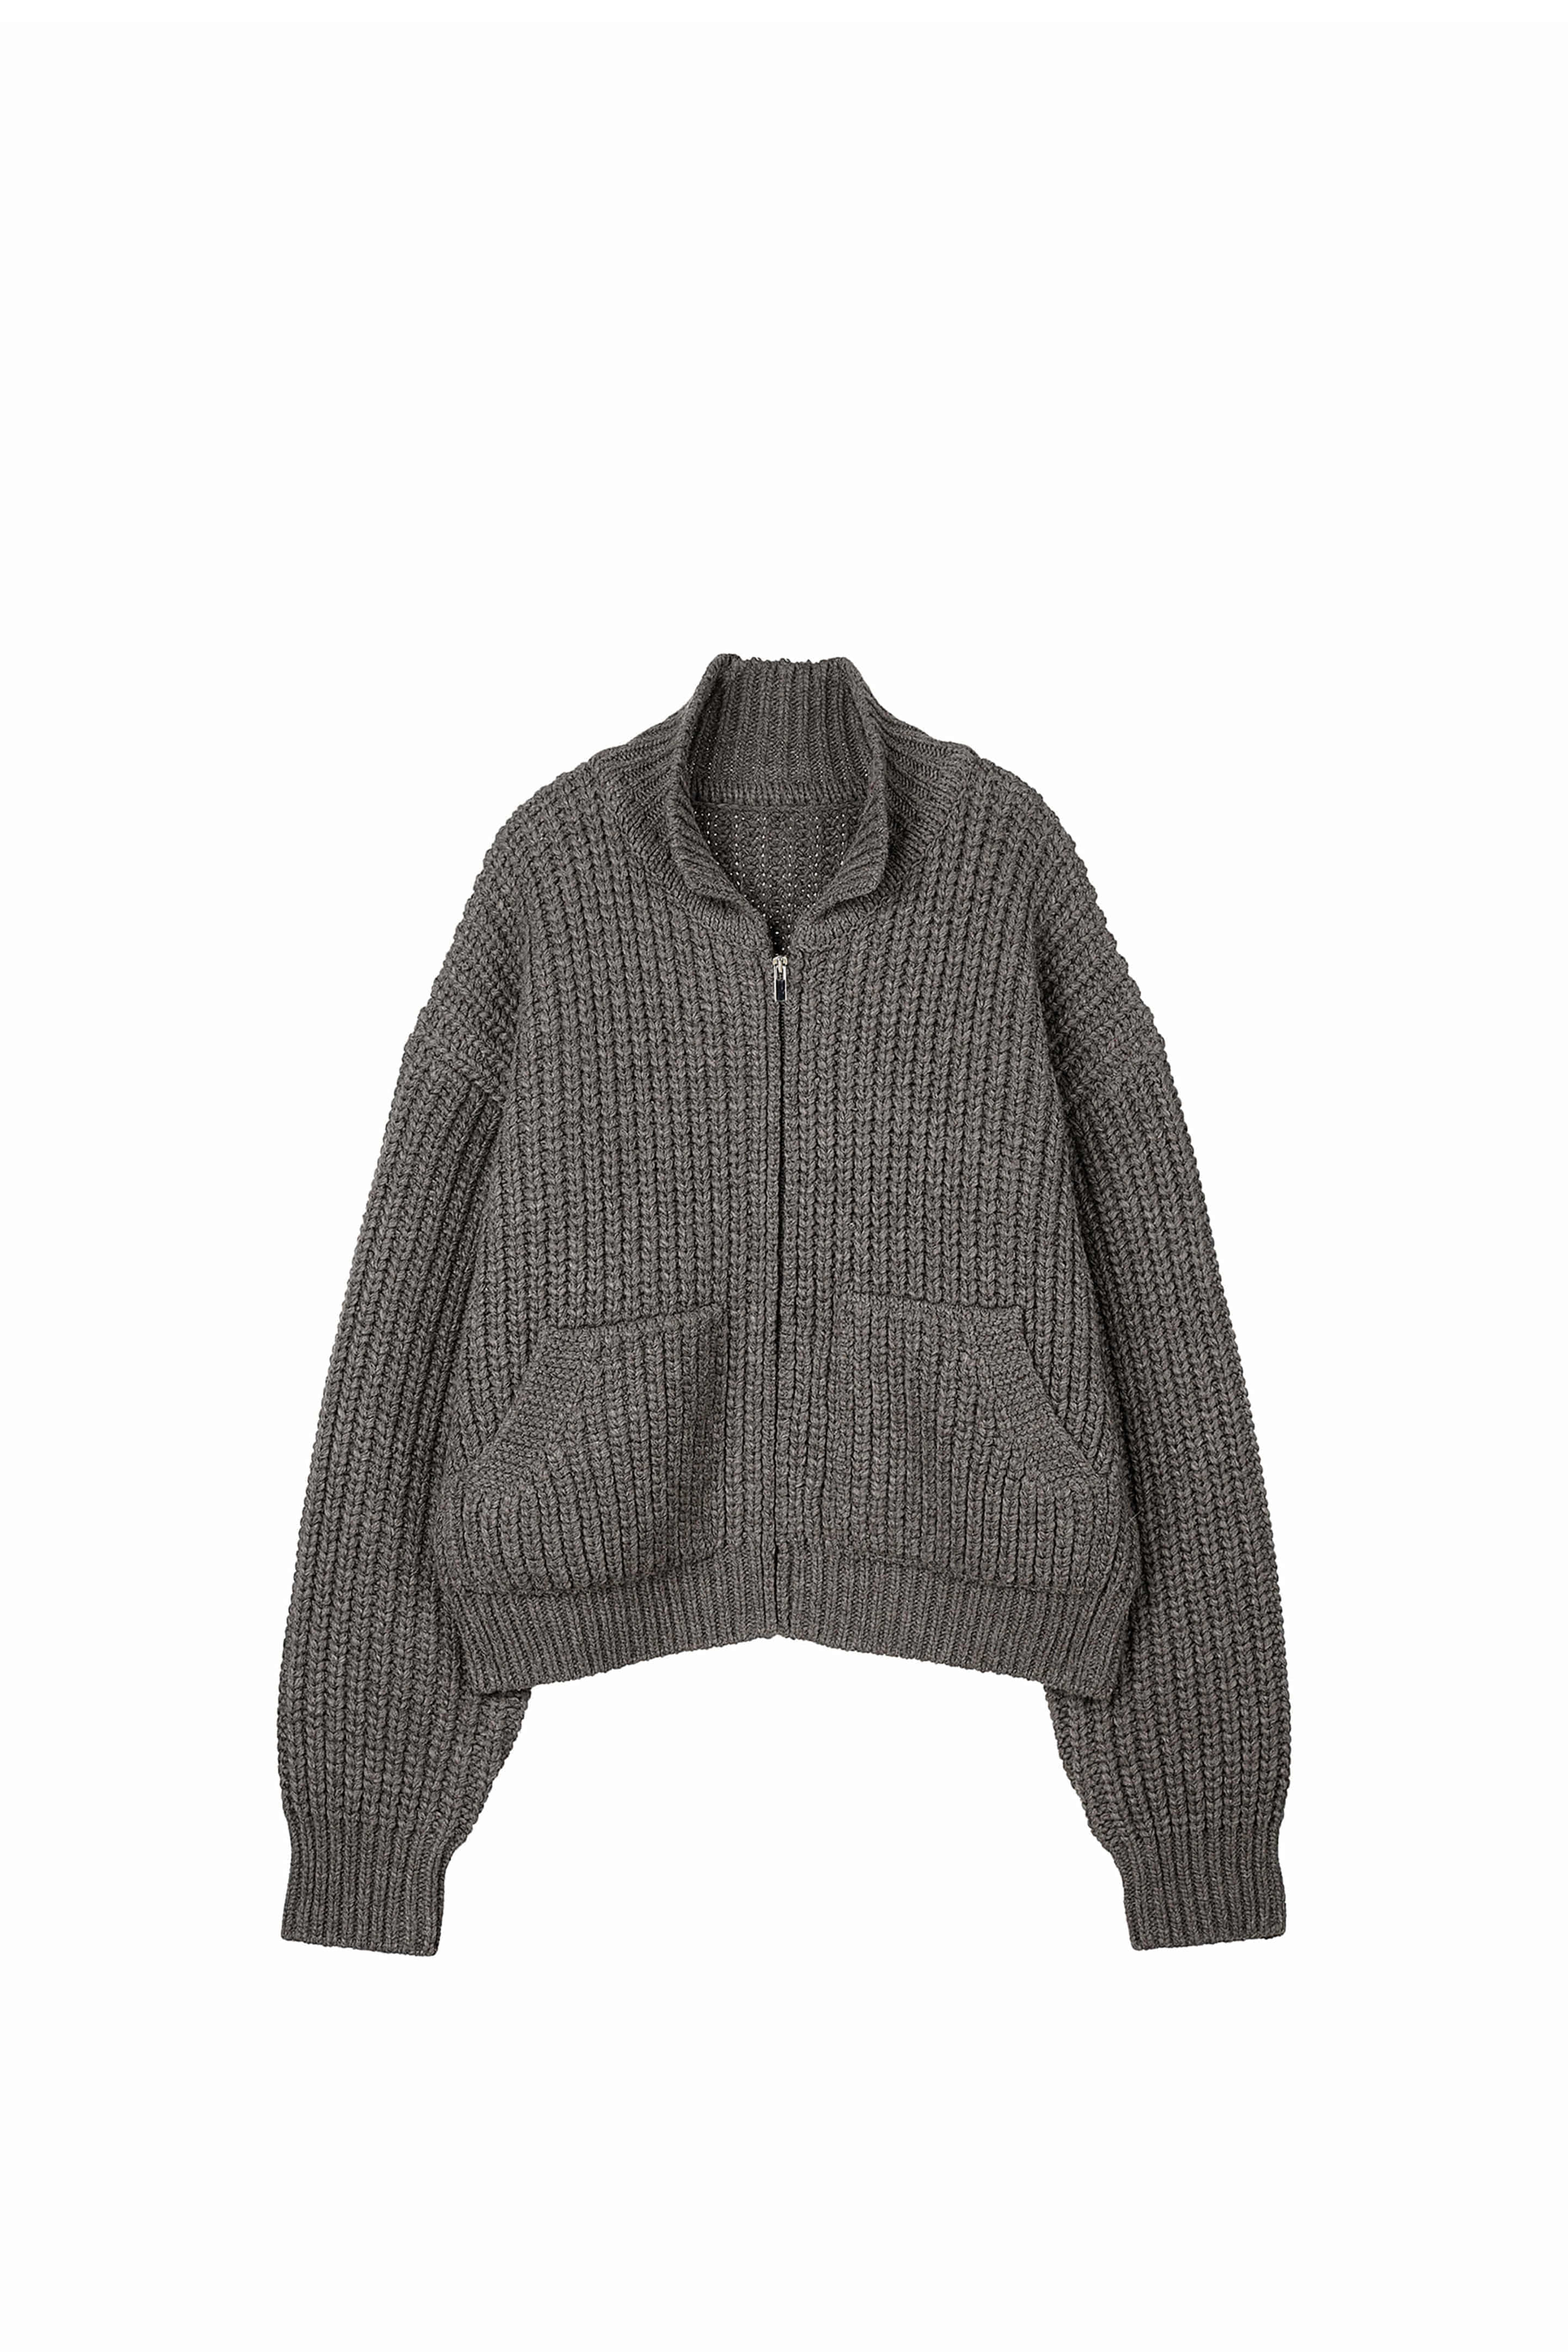 2nd) Marais Knitted Blouson Jacket Grey Brown